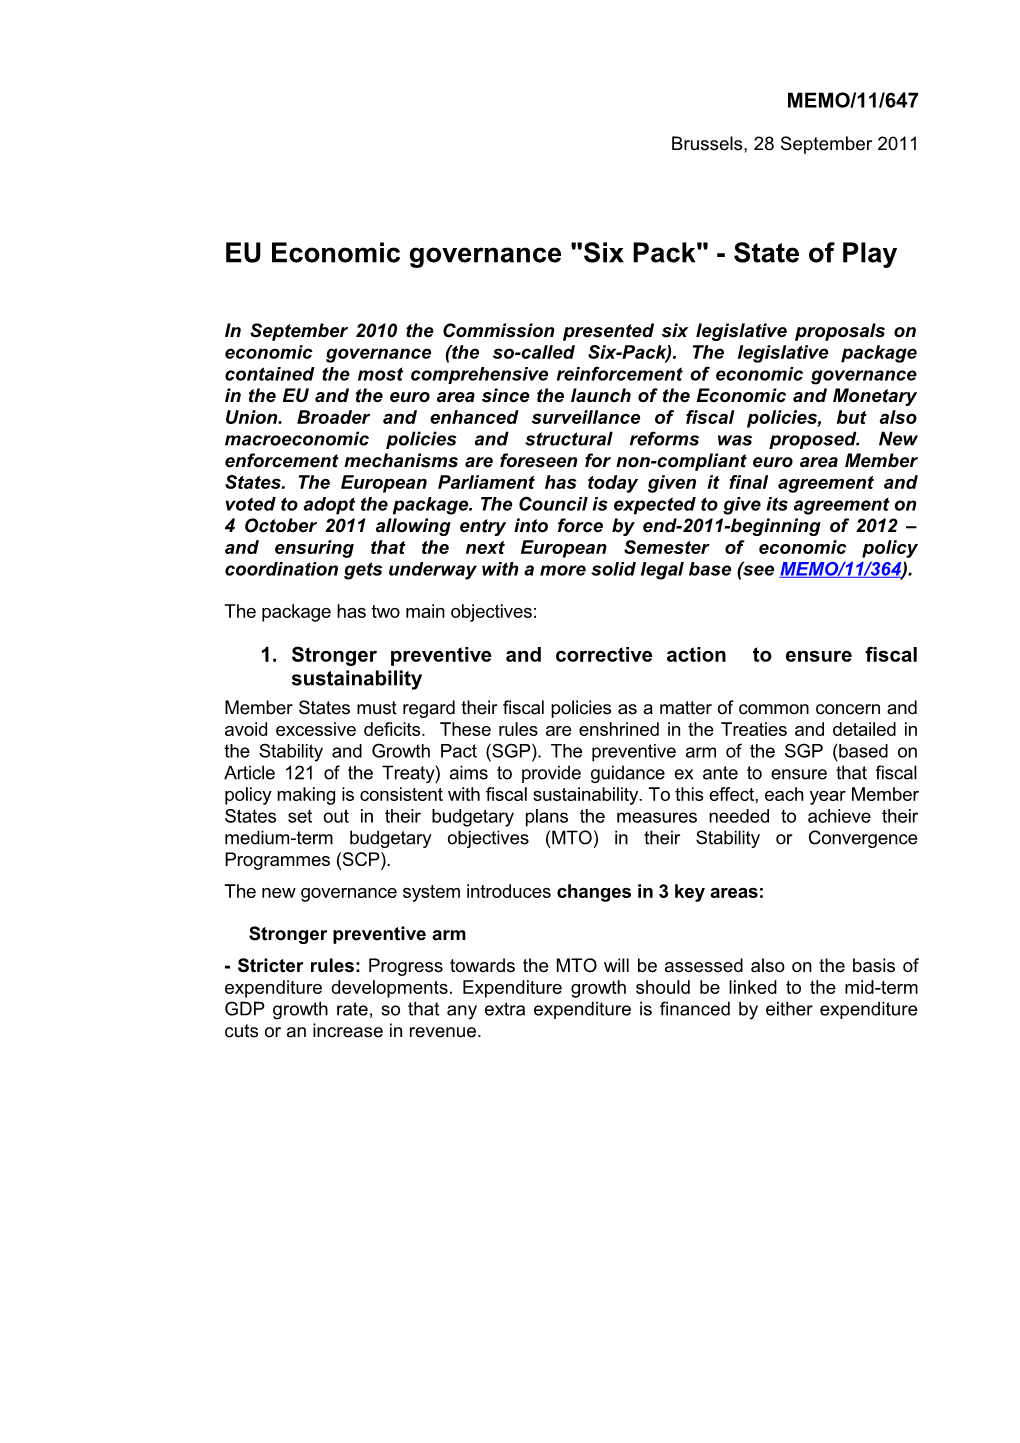 EU Economic Governance Six Pack - State of Play